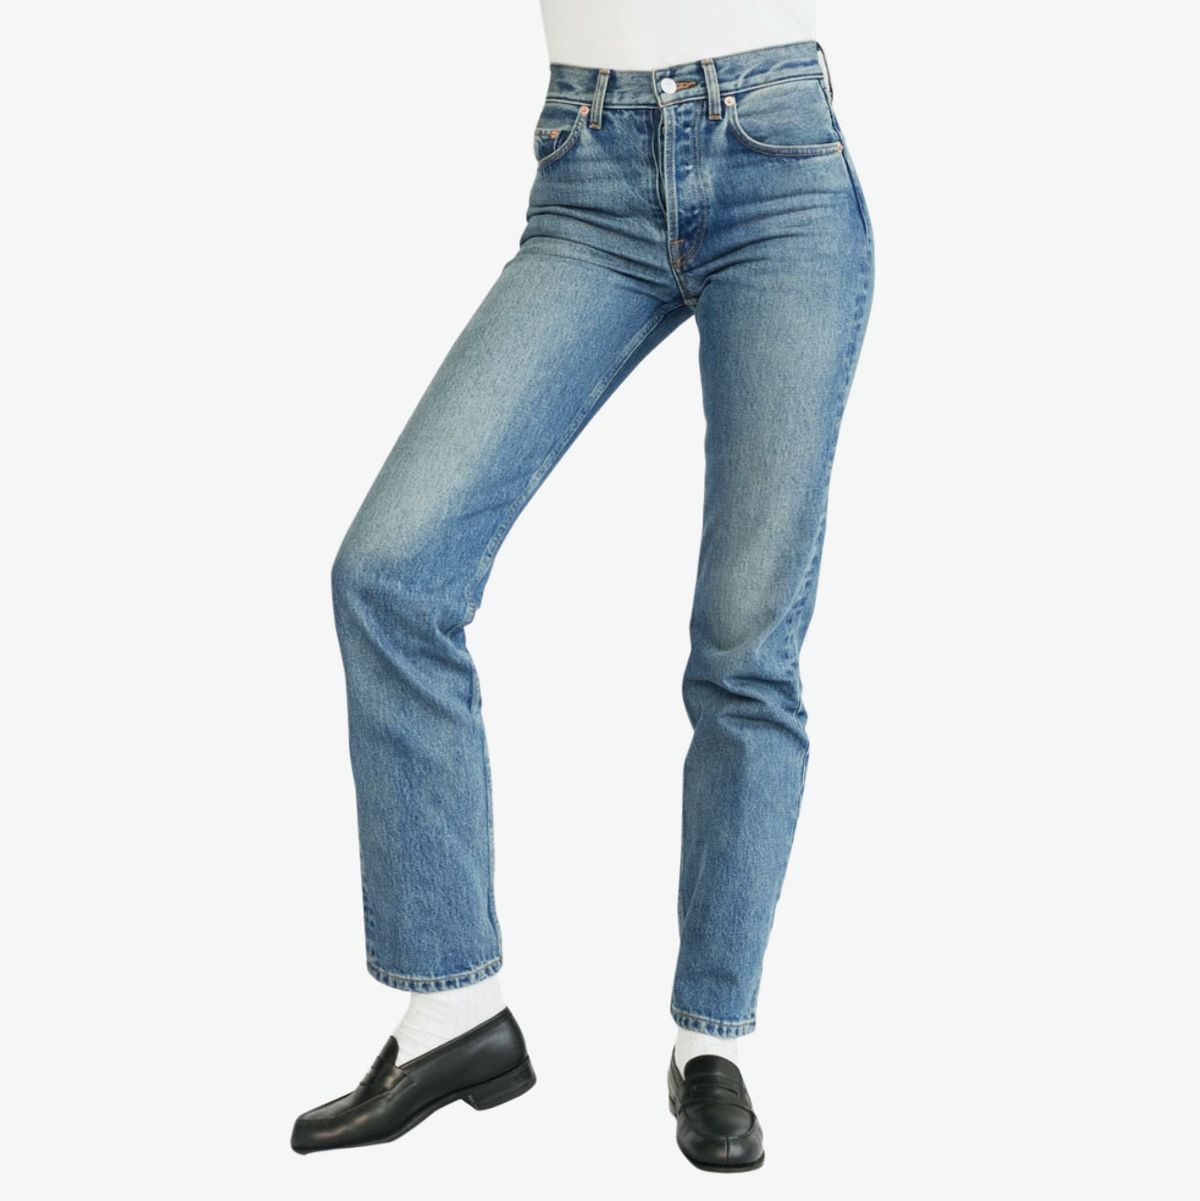 best jeans brand 2019